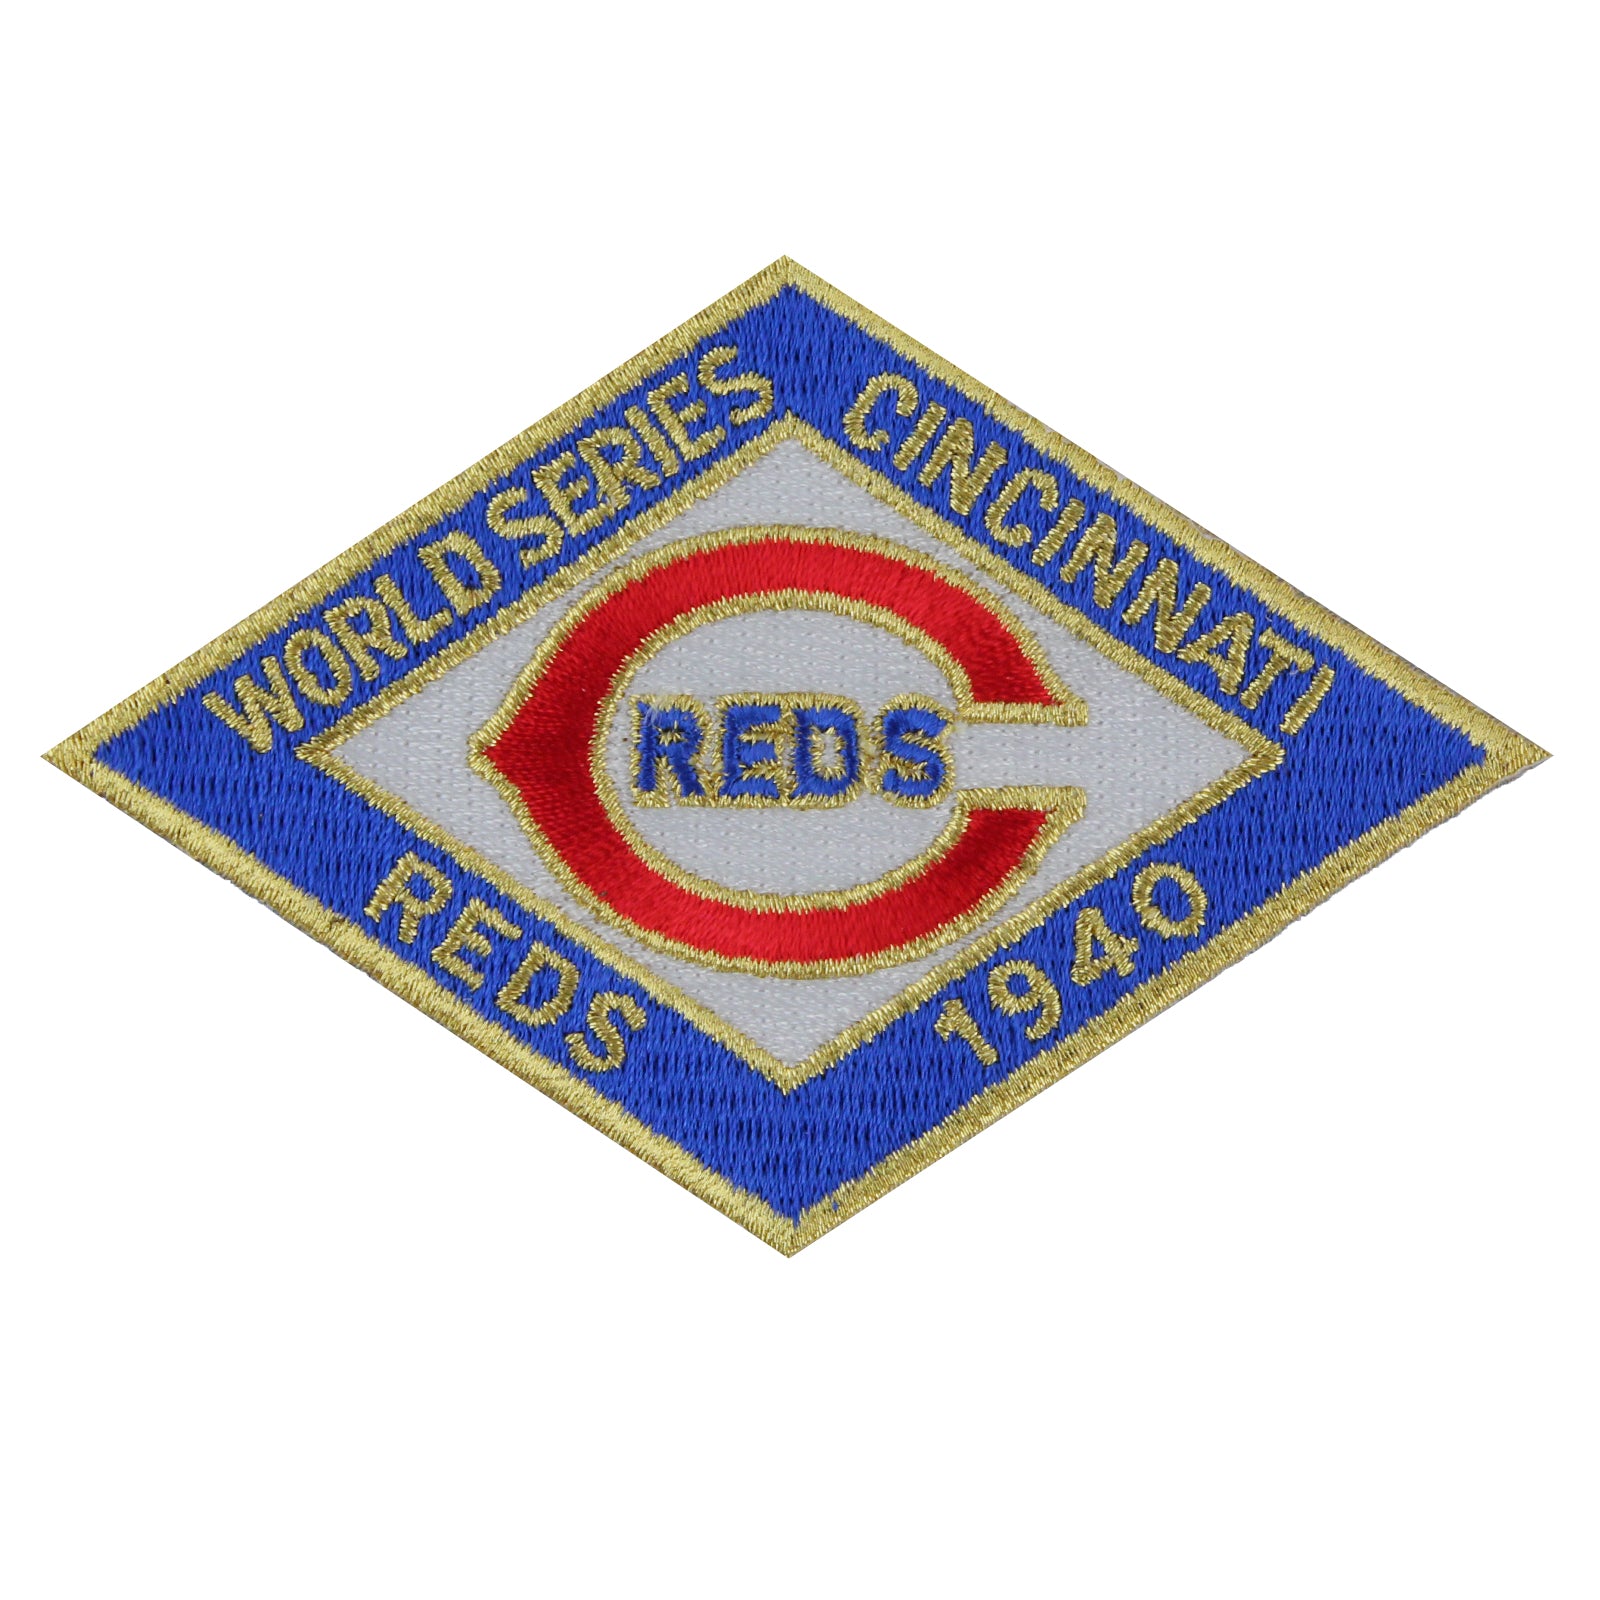 Cincinnati Reds Baseball Jersey MLB Hello Kitty Custom Name & Number